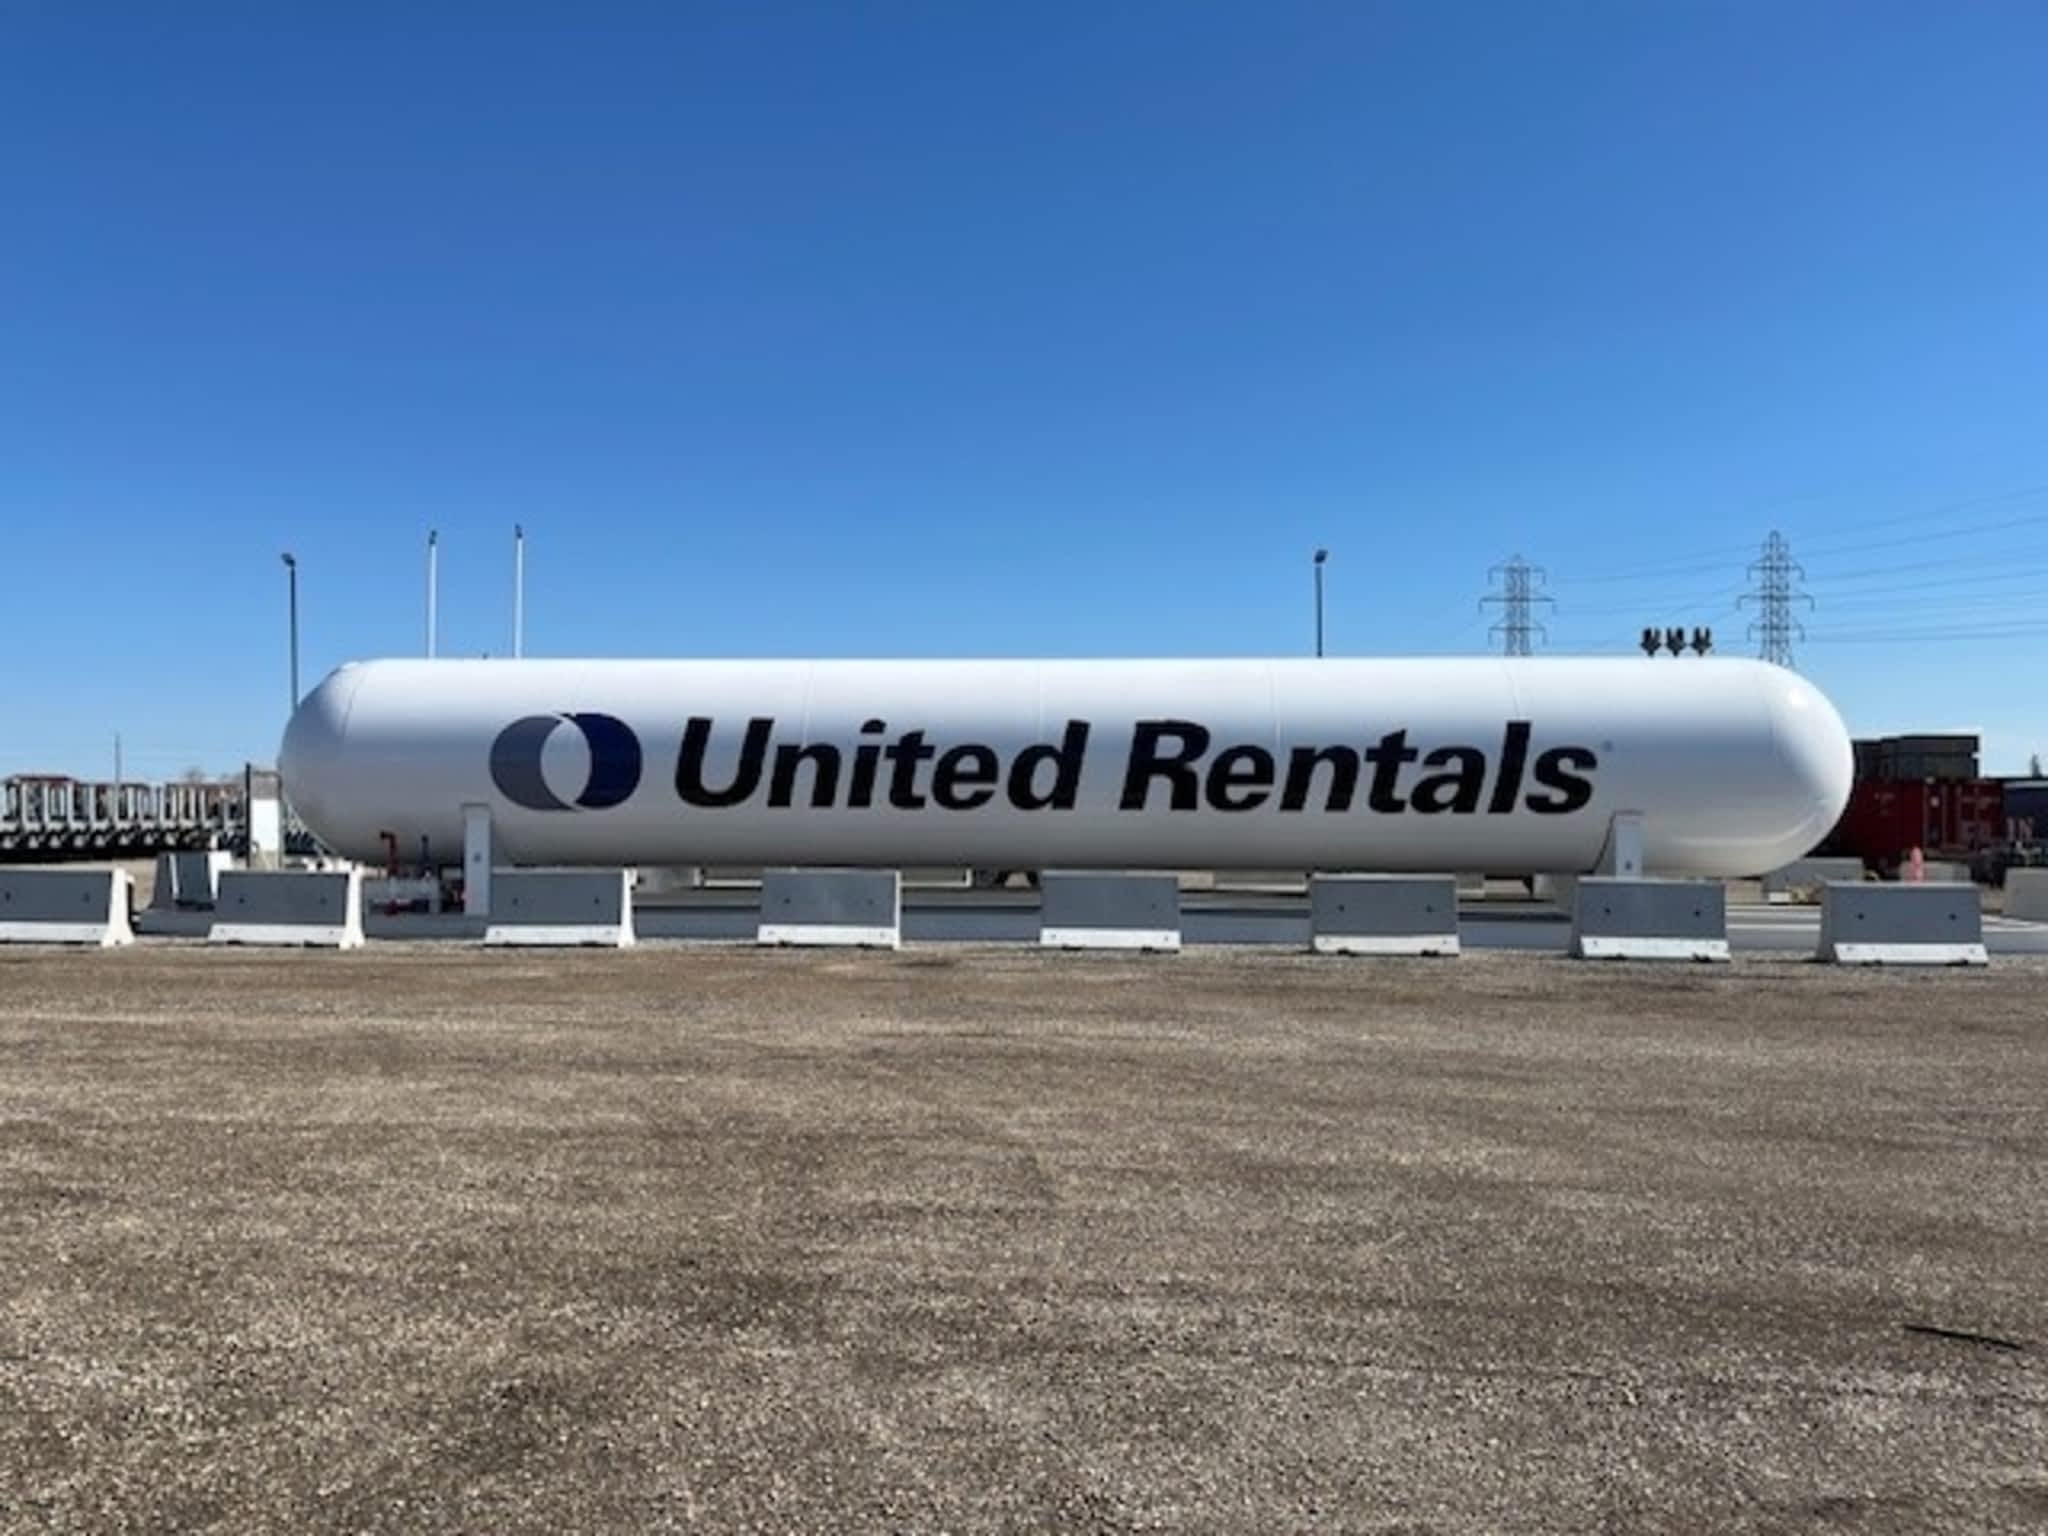 photo United Rentals - Fluid Solutions: Pumps, Tanks, Filtration